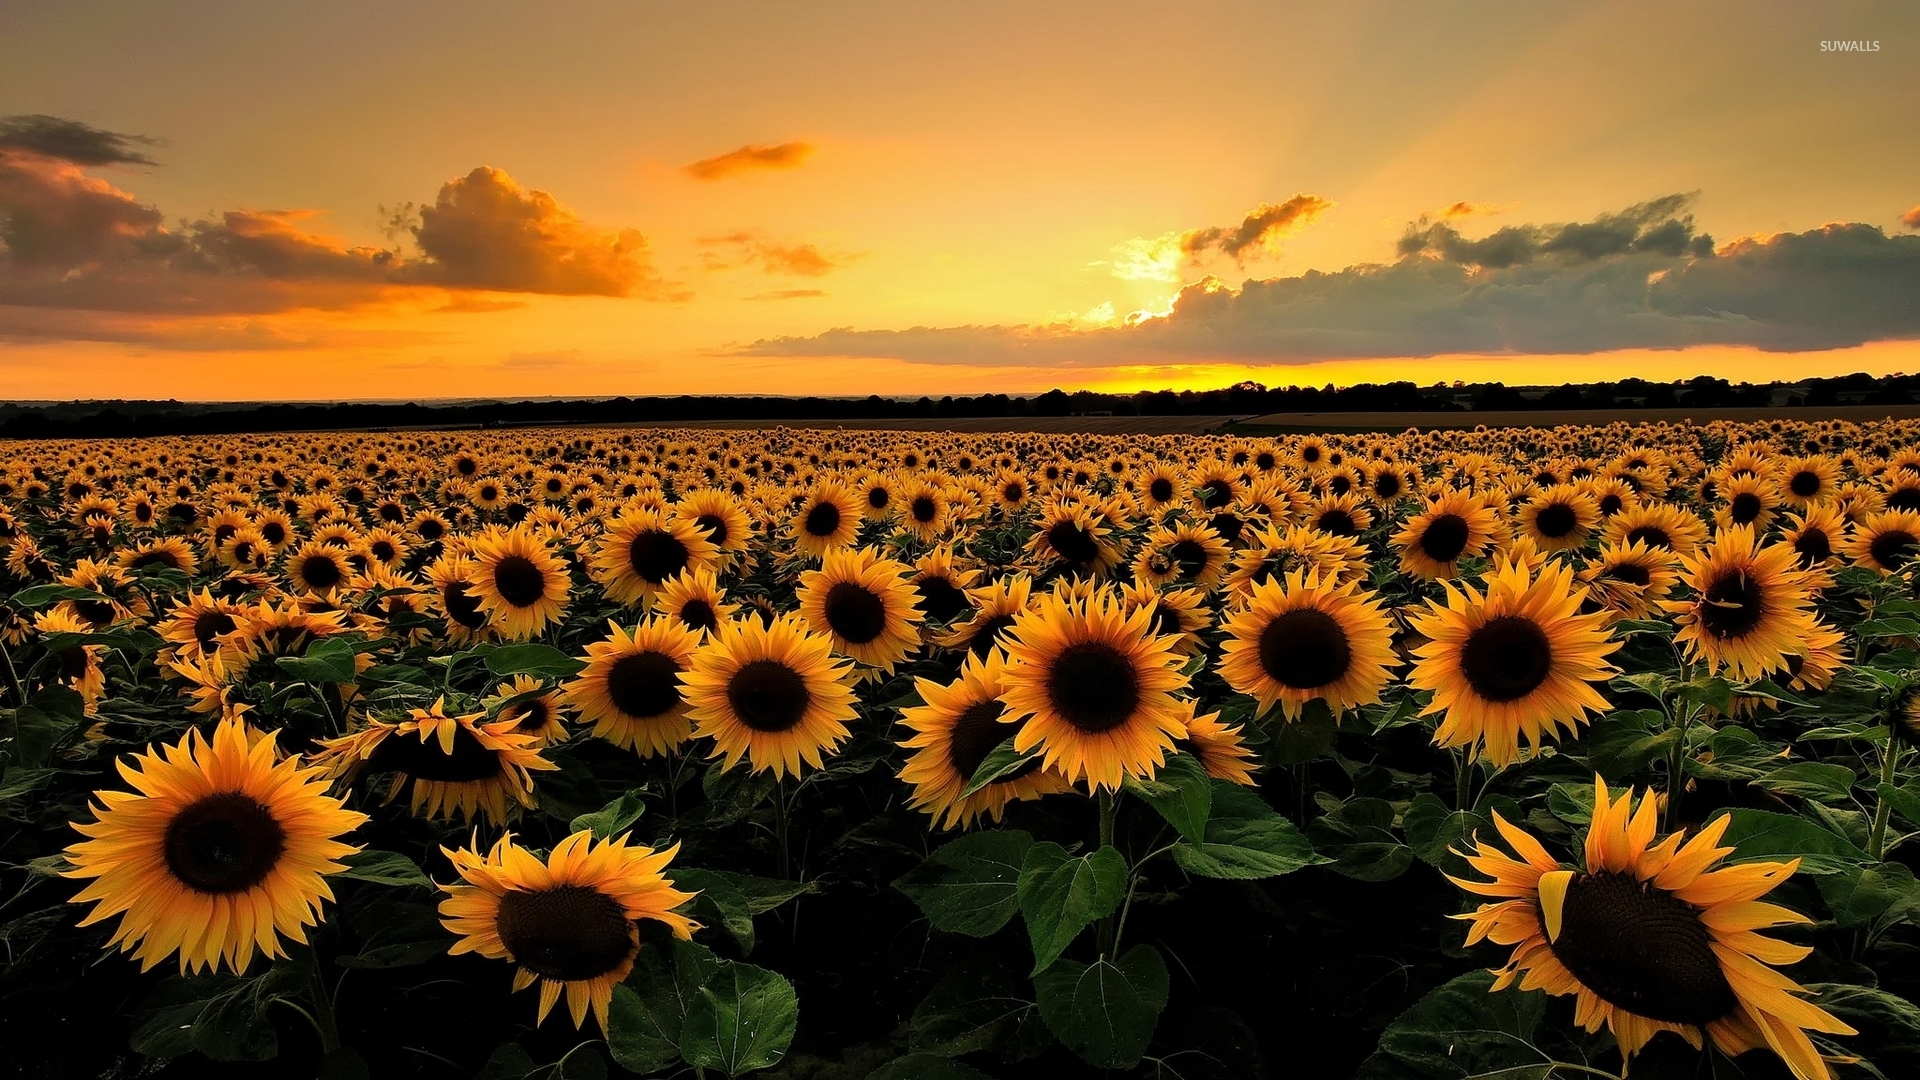 Sunset on the sunflower field wallpaper - Flower wallpapers - #53670